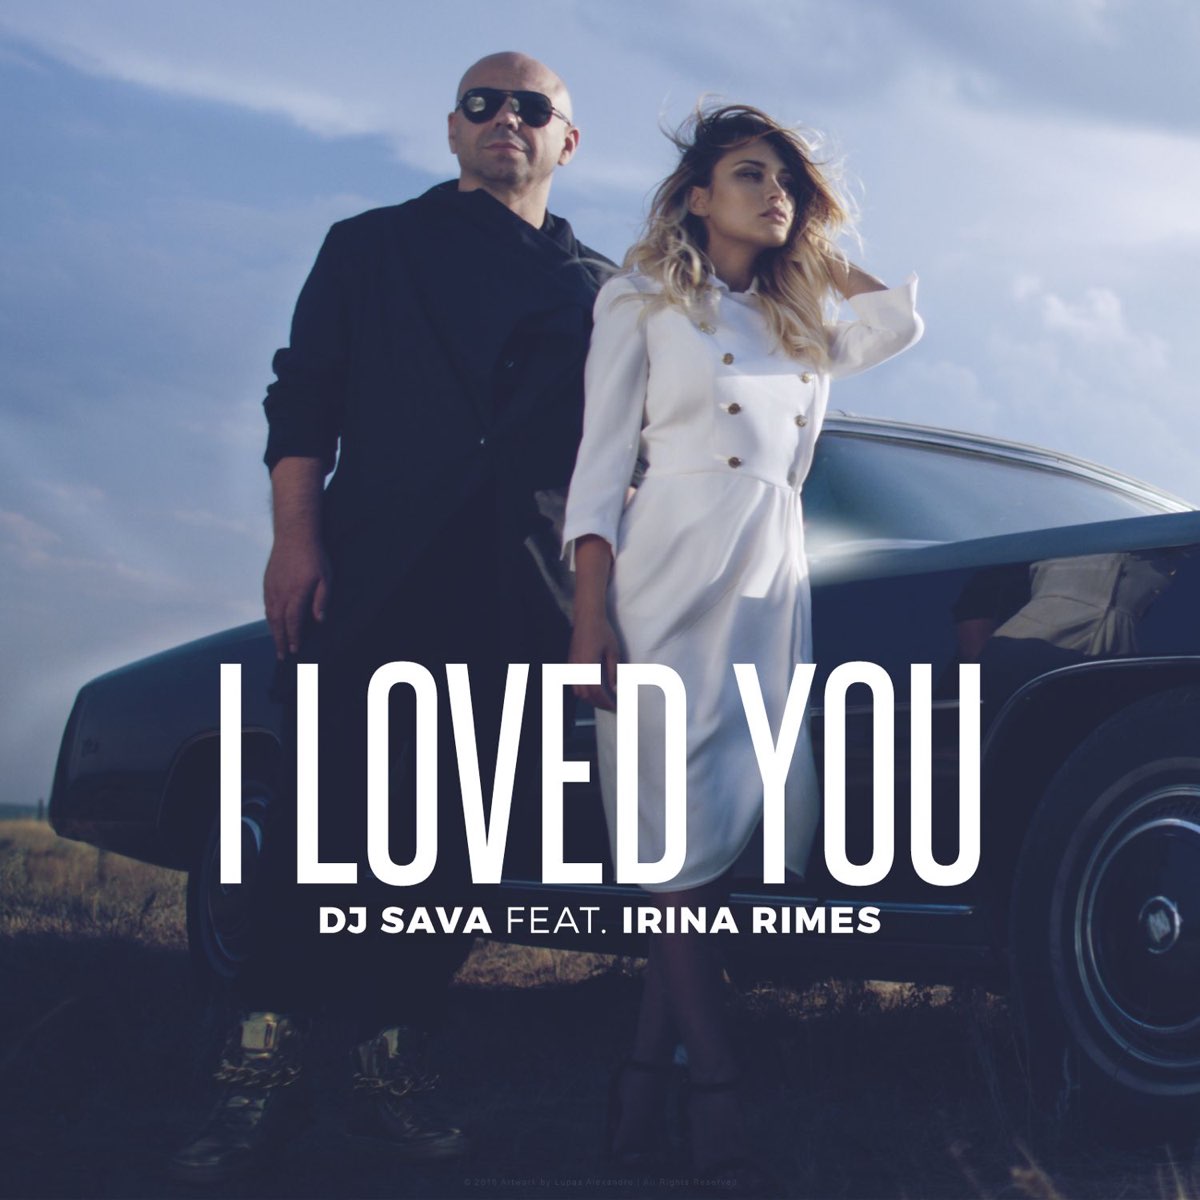 I Loved You (feat. Irina Rimes) - EP - Album by Dj Sava - Apple Music